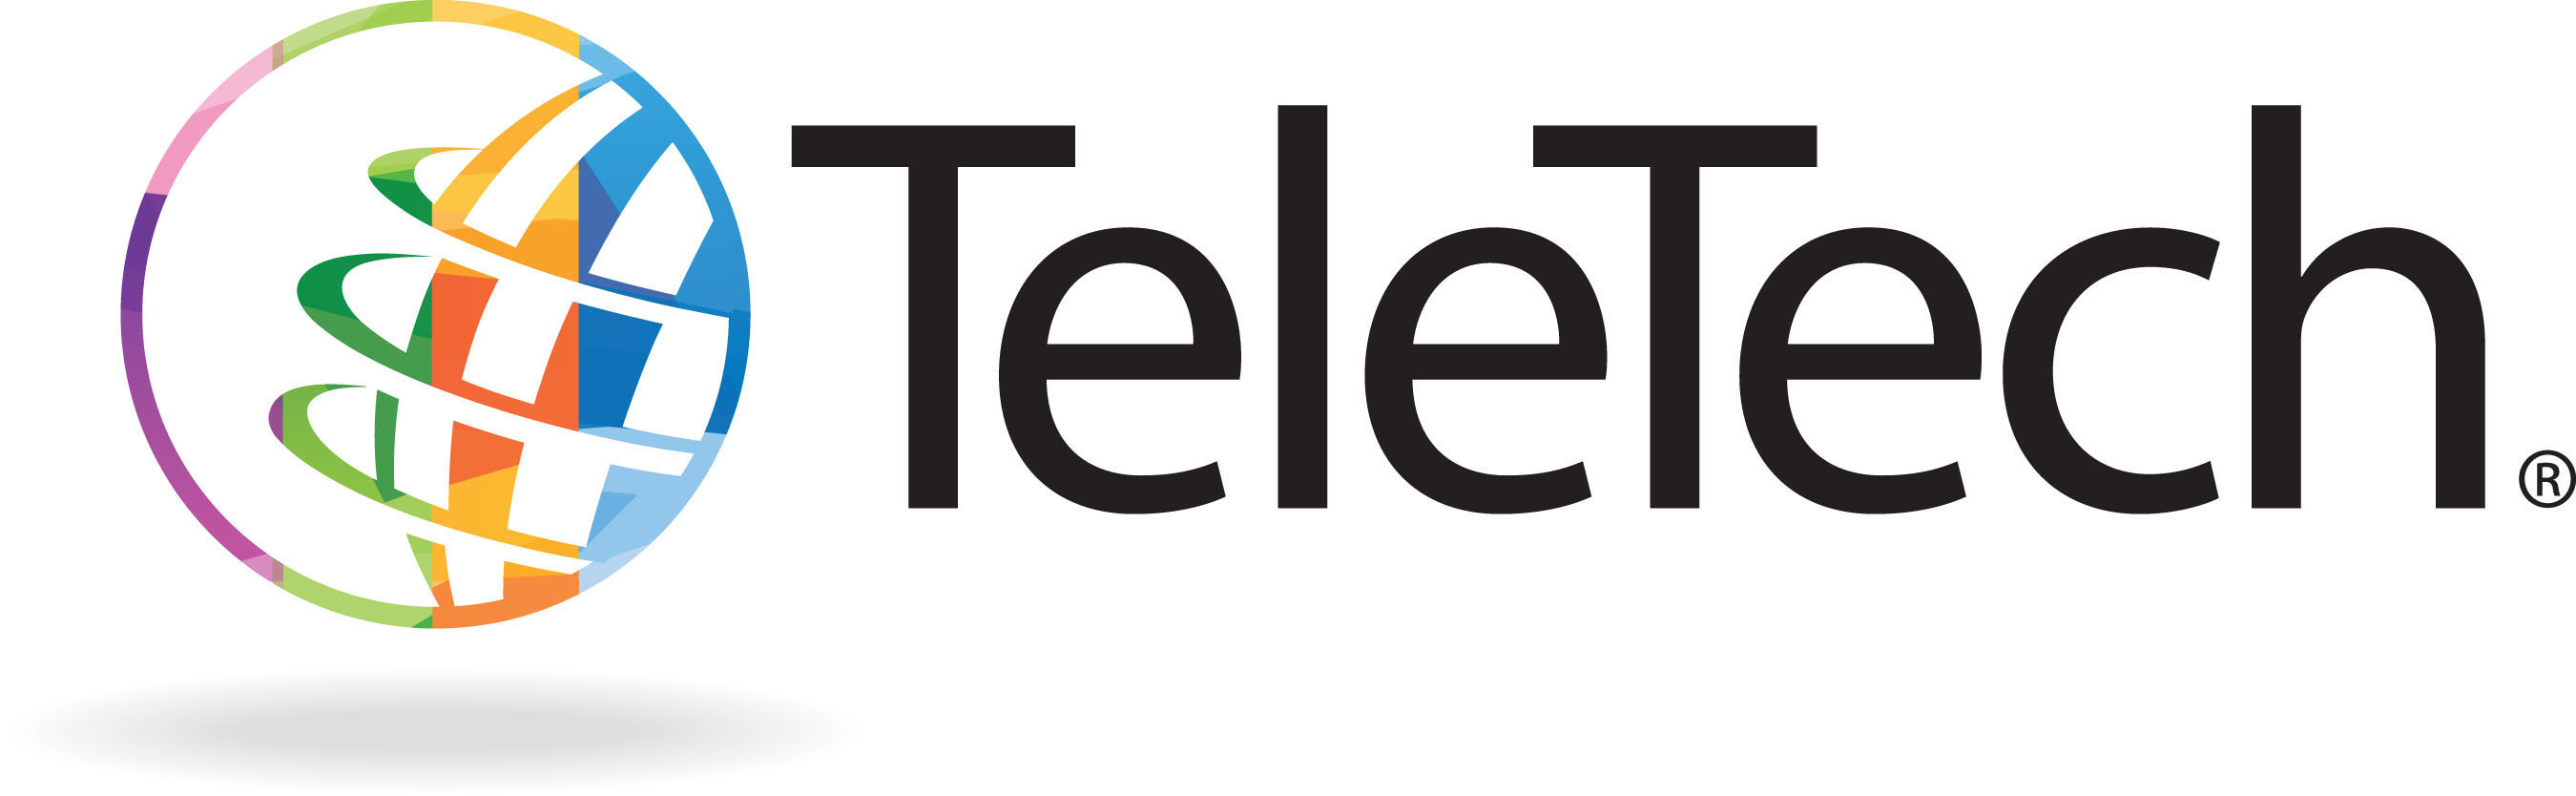 TeleTech Holdings, Inc.  www.TeleTech.com . (PRNewsFoto/TeleTech Holdings, Inc.)